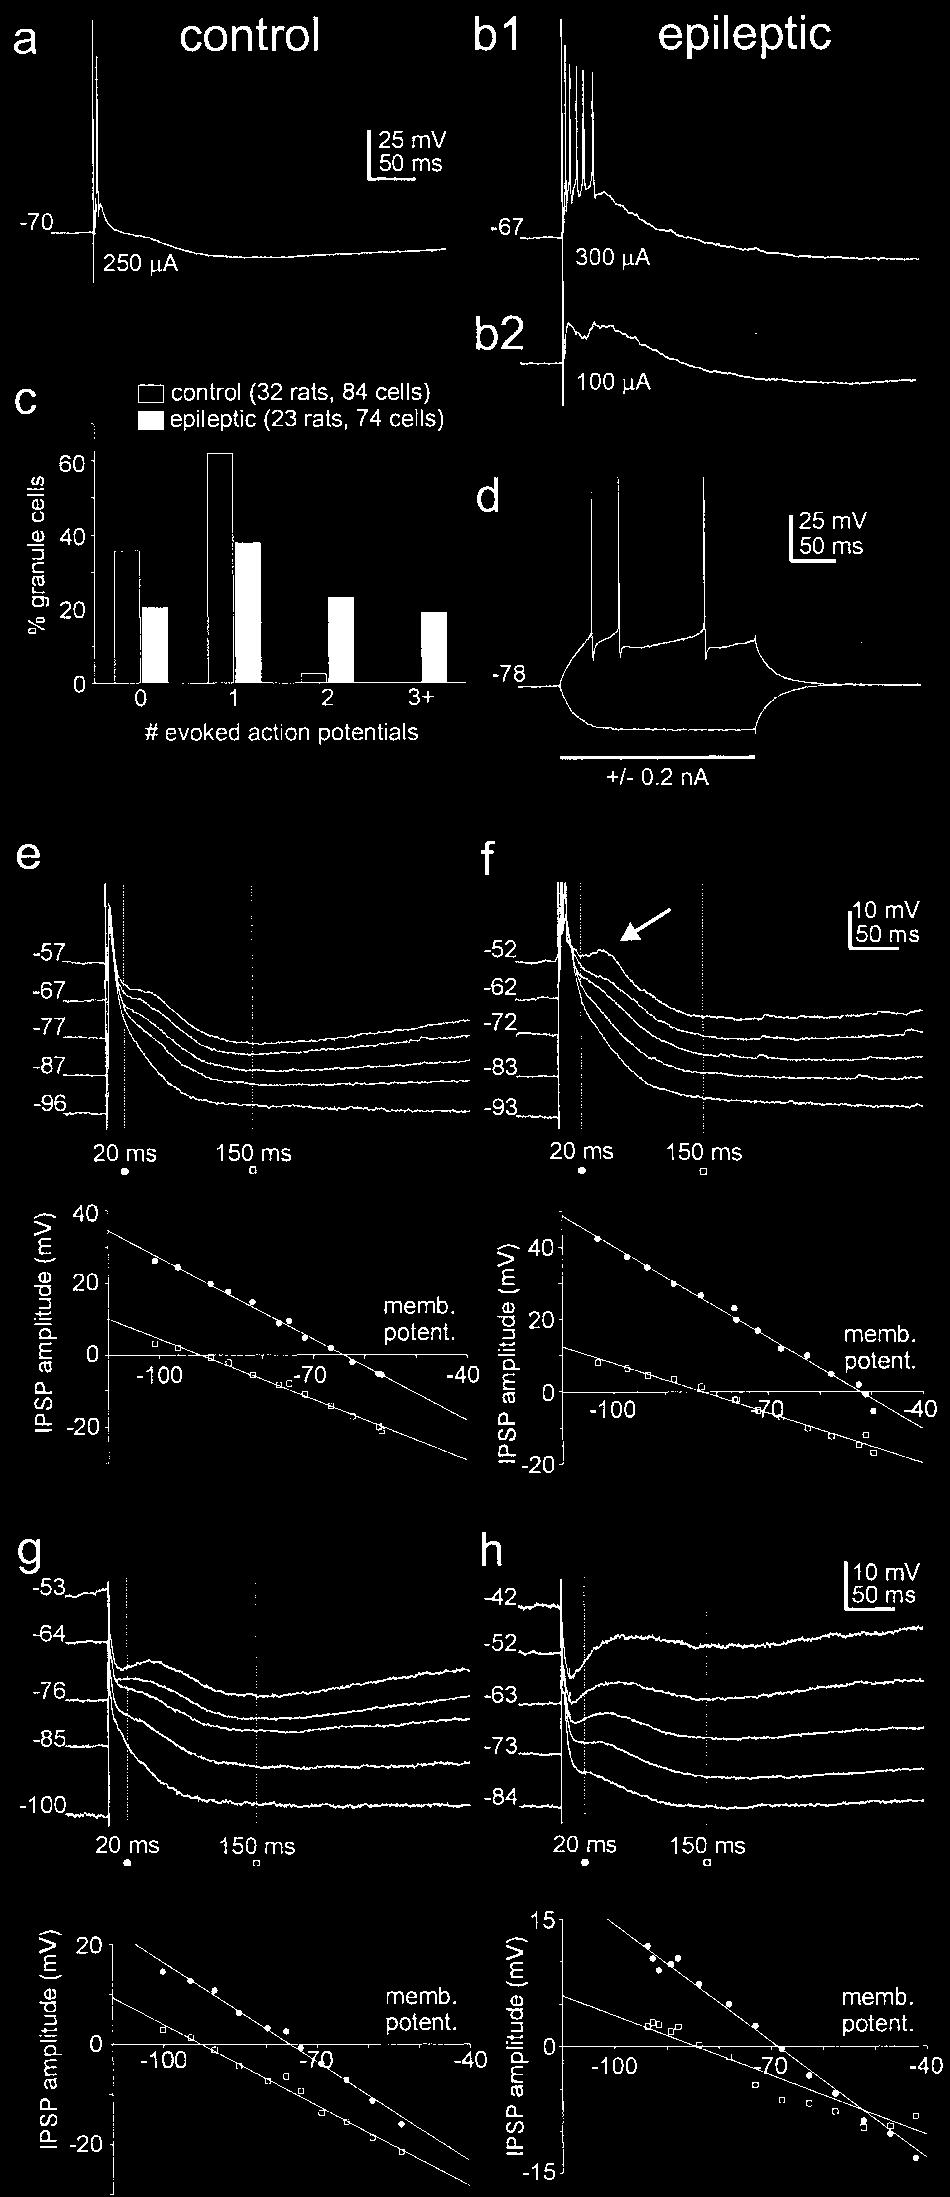 2444 J. Neurosci., March 15, 2003 23(6):2440 2452 Kobayashi and Buckmaster Reduced Dentate Granule Cell Inhibition in Epilepsy Figure 2.